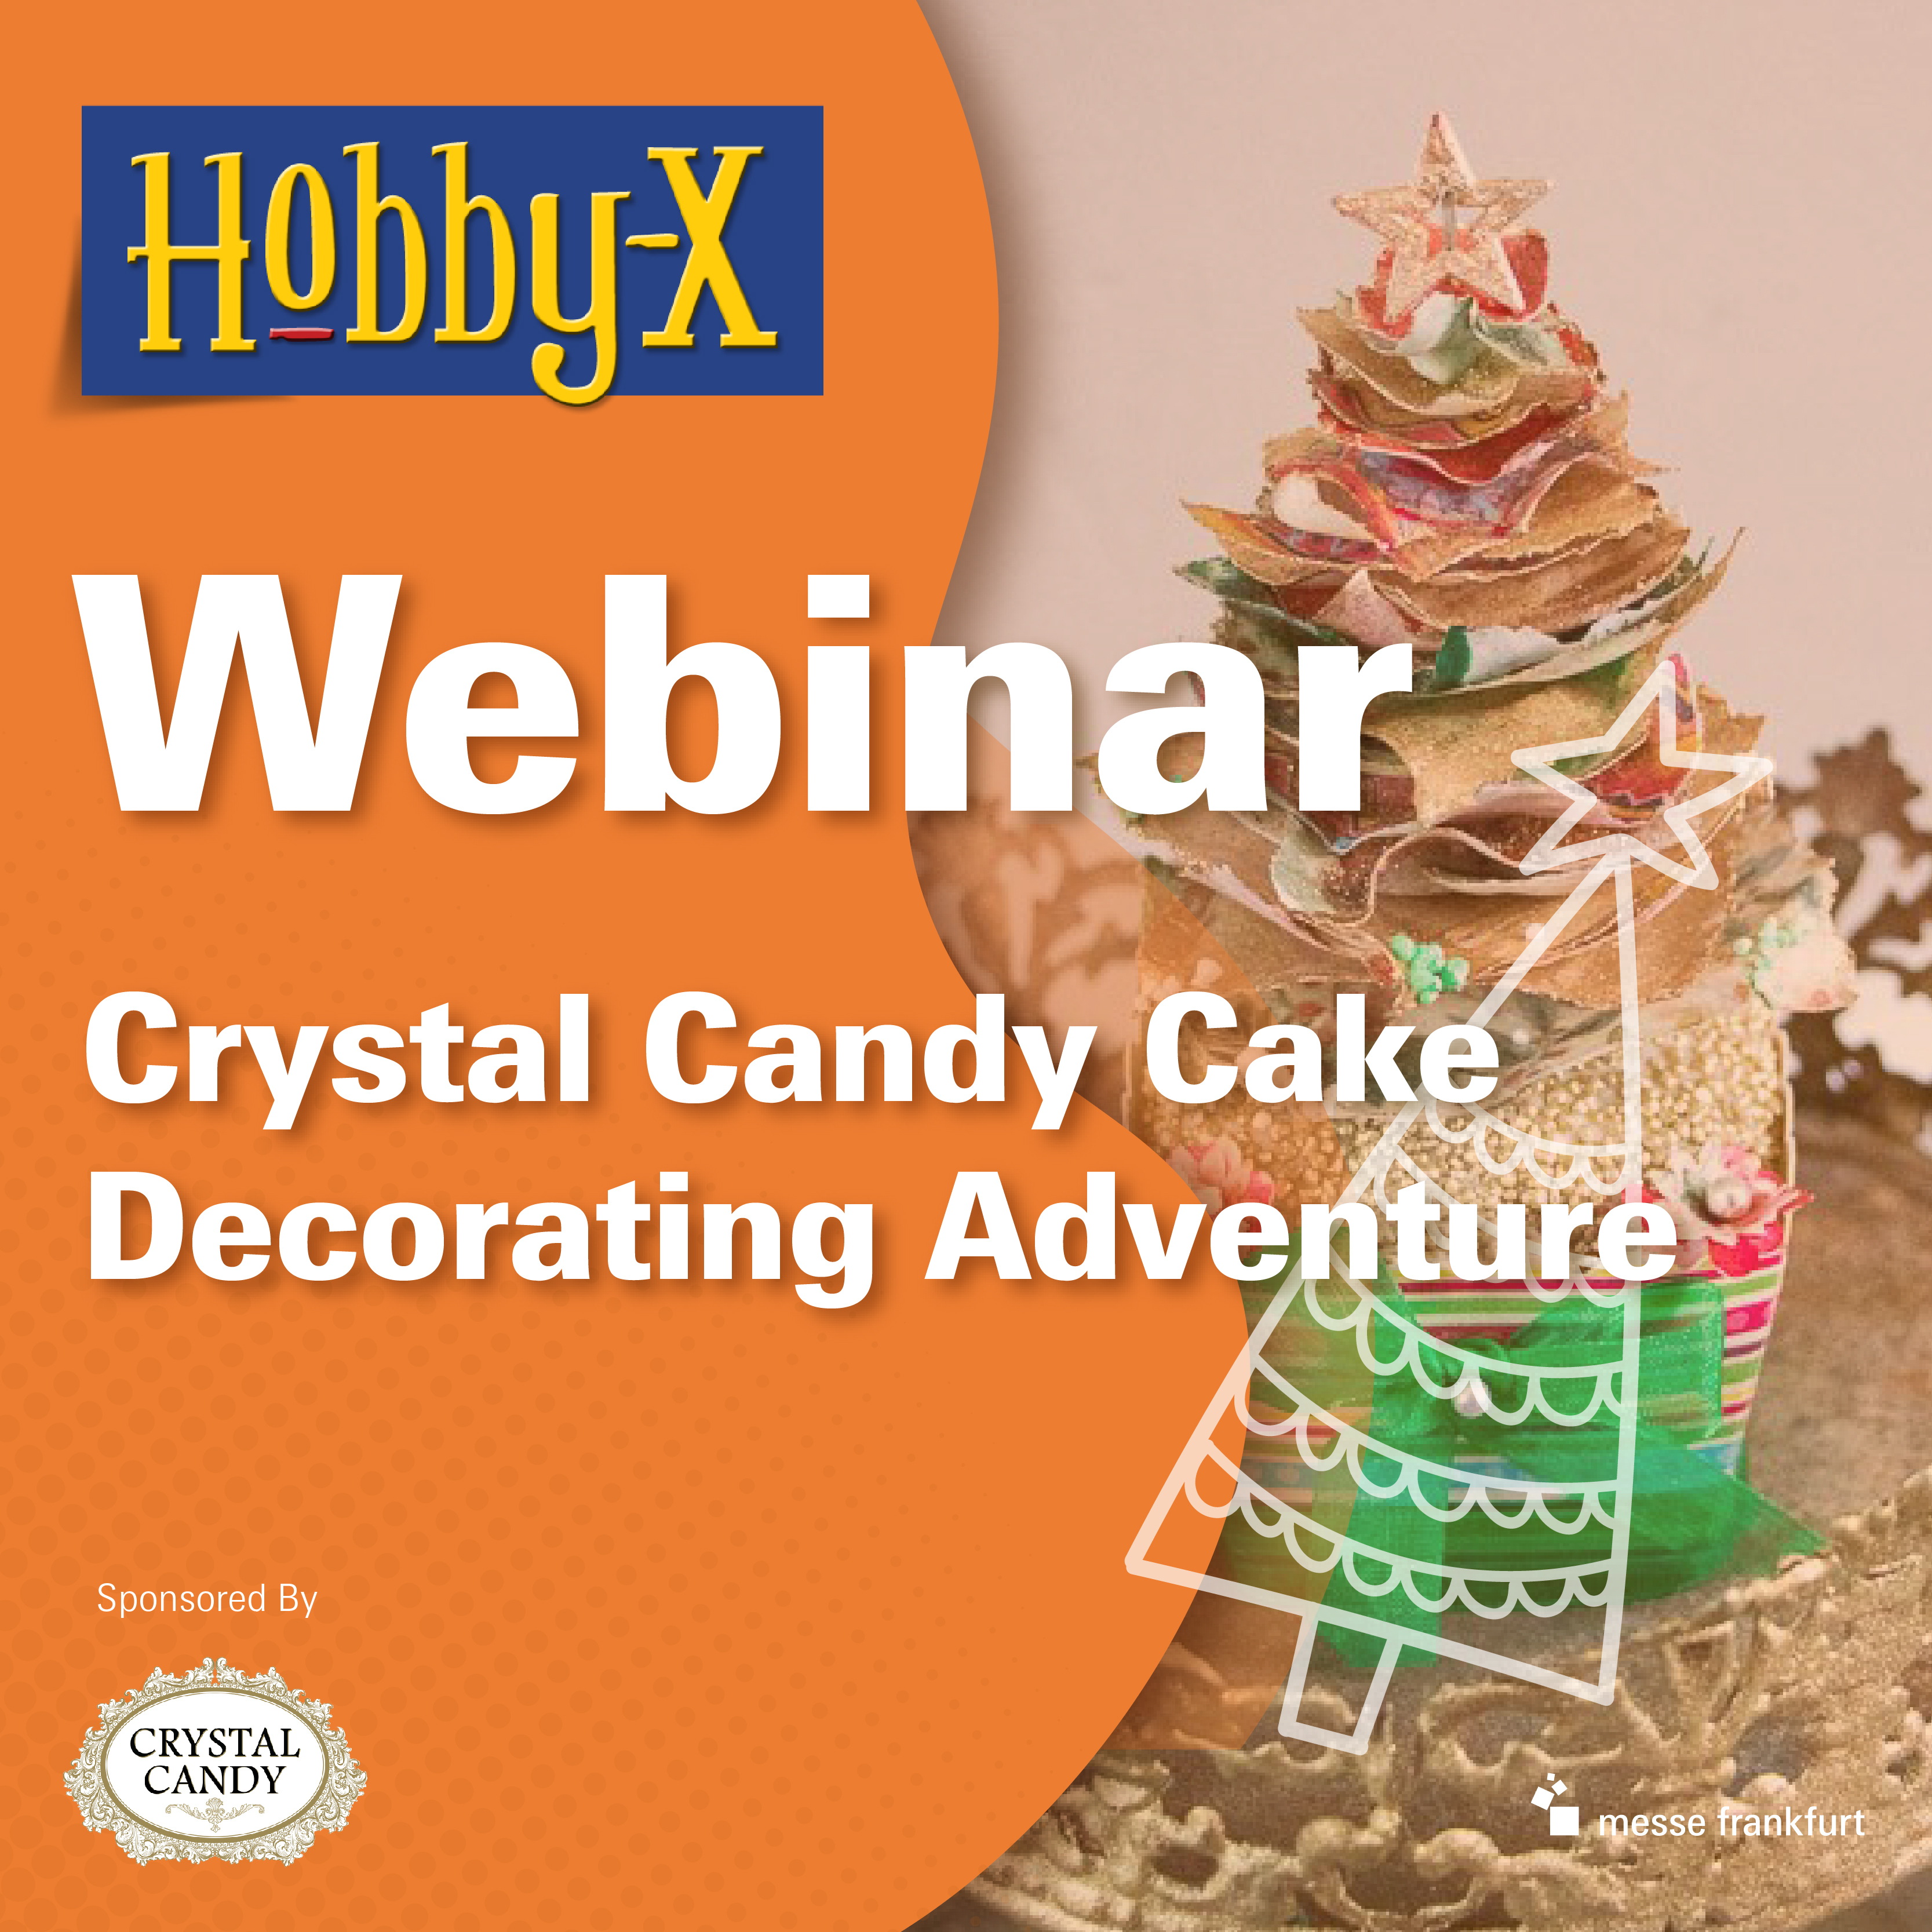 Hobby-X Webinar Website Image - Crystal Candy Christmas Adventure - 07-12-20-01